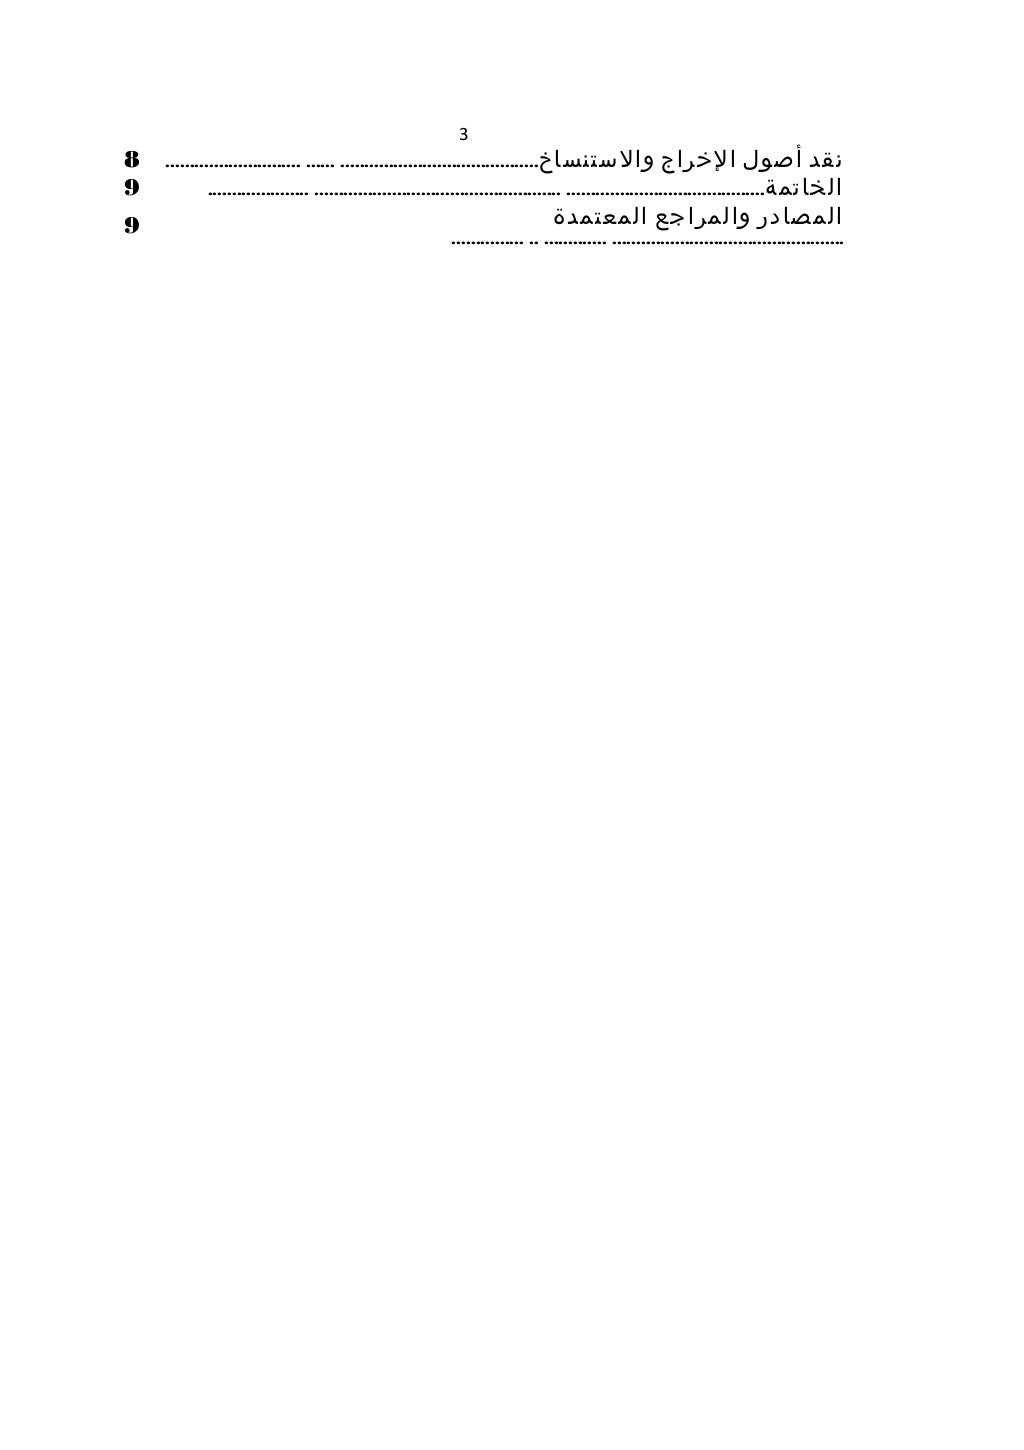 Masters thesis evaluation form in arabic نموذج نقد رسالة ماجستير